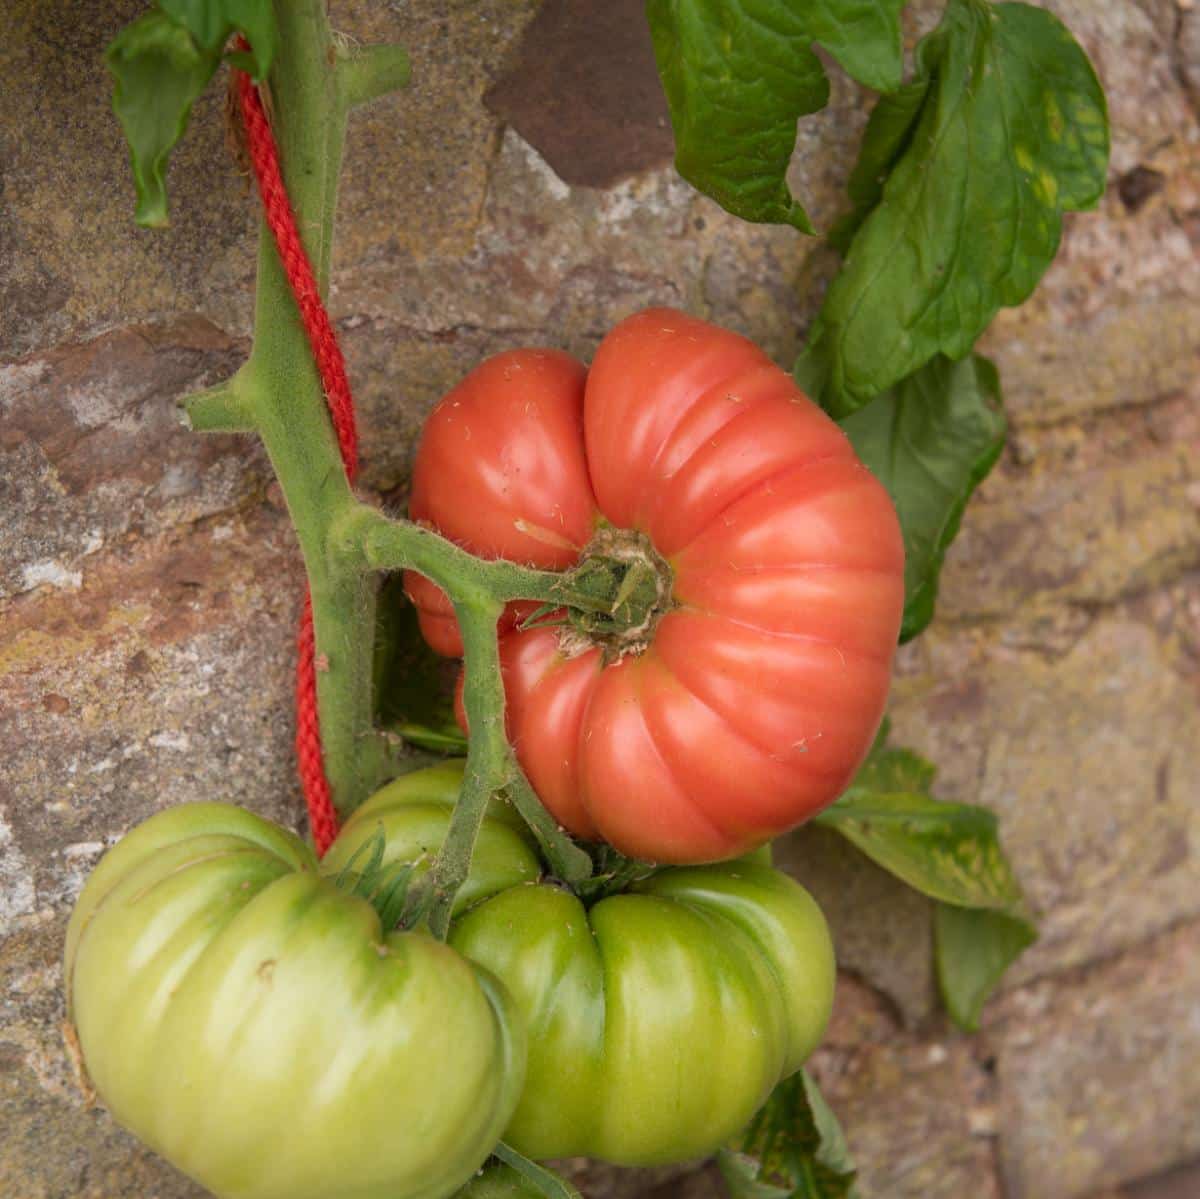 Mortgage lifter tomato variety